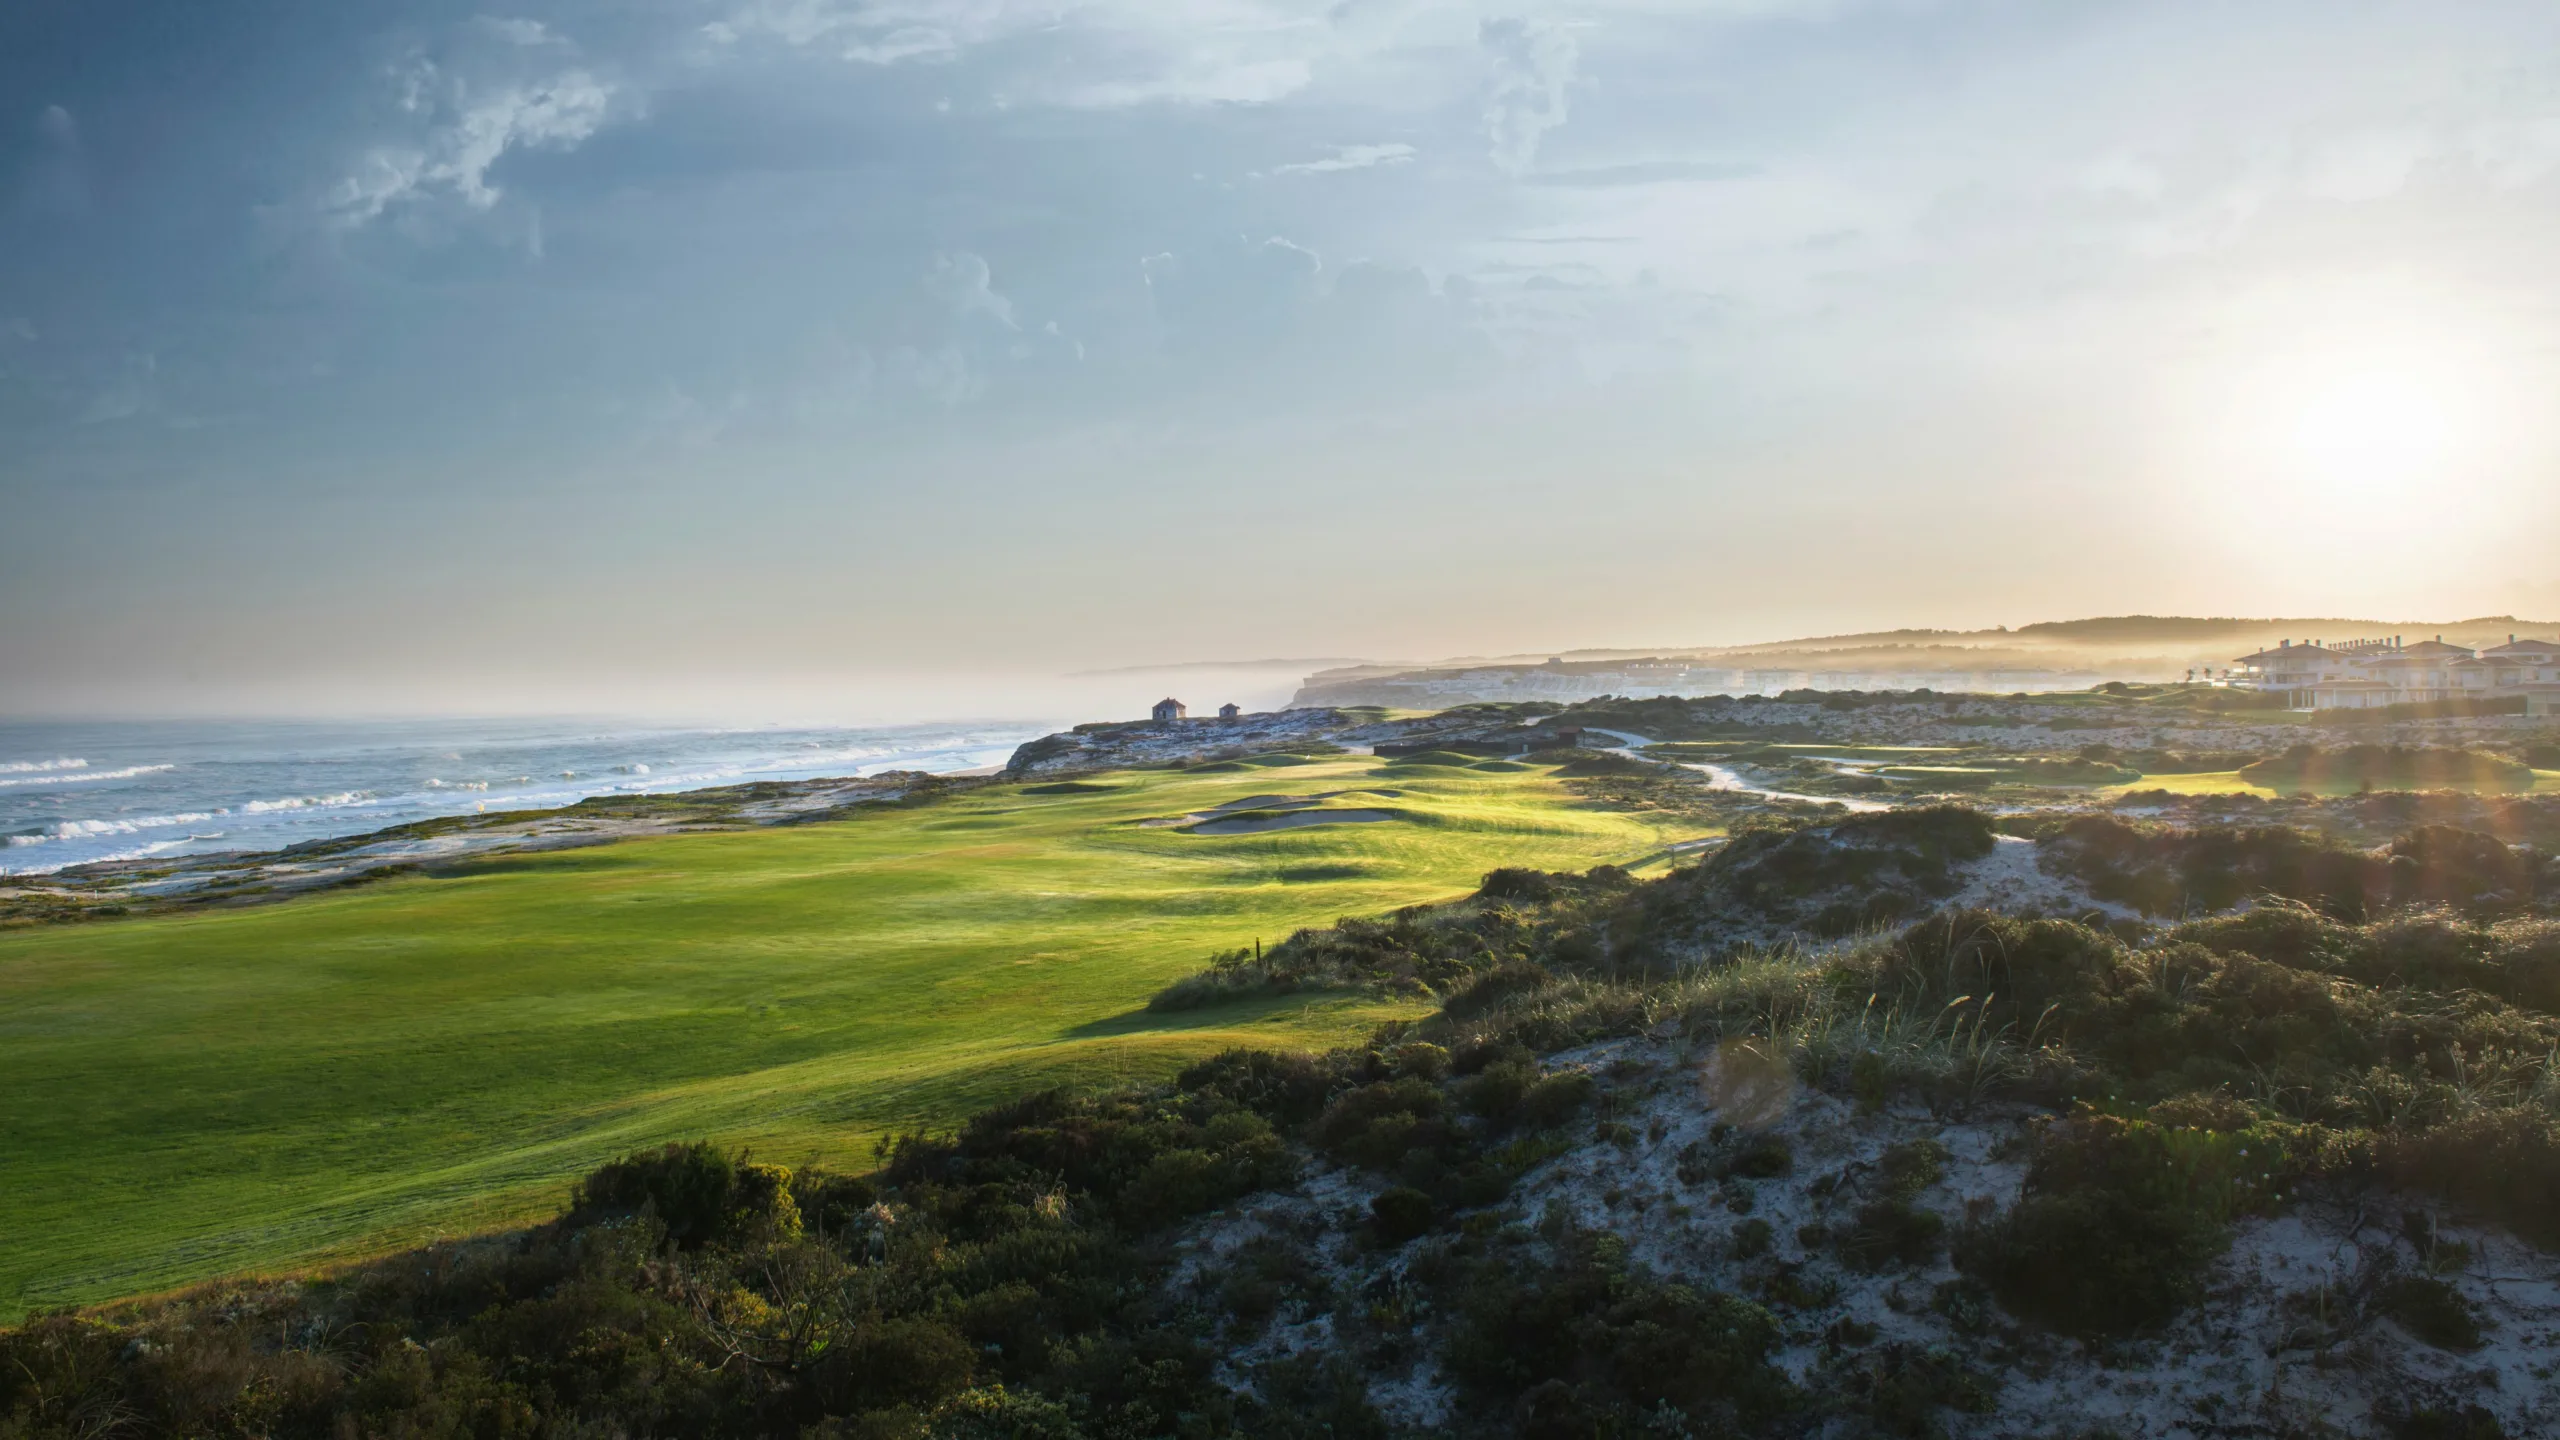 Praia D’El Rey Golf & Beach Resort – Public Golf Courses in Centro Region Portugal, Portugal